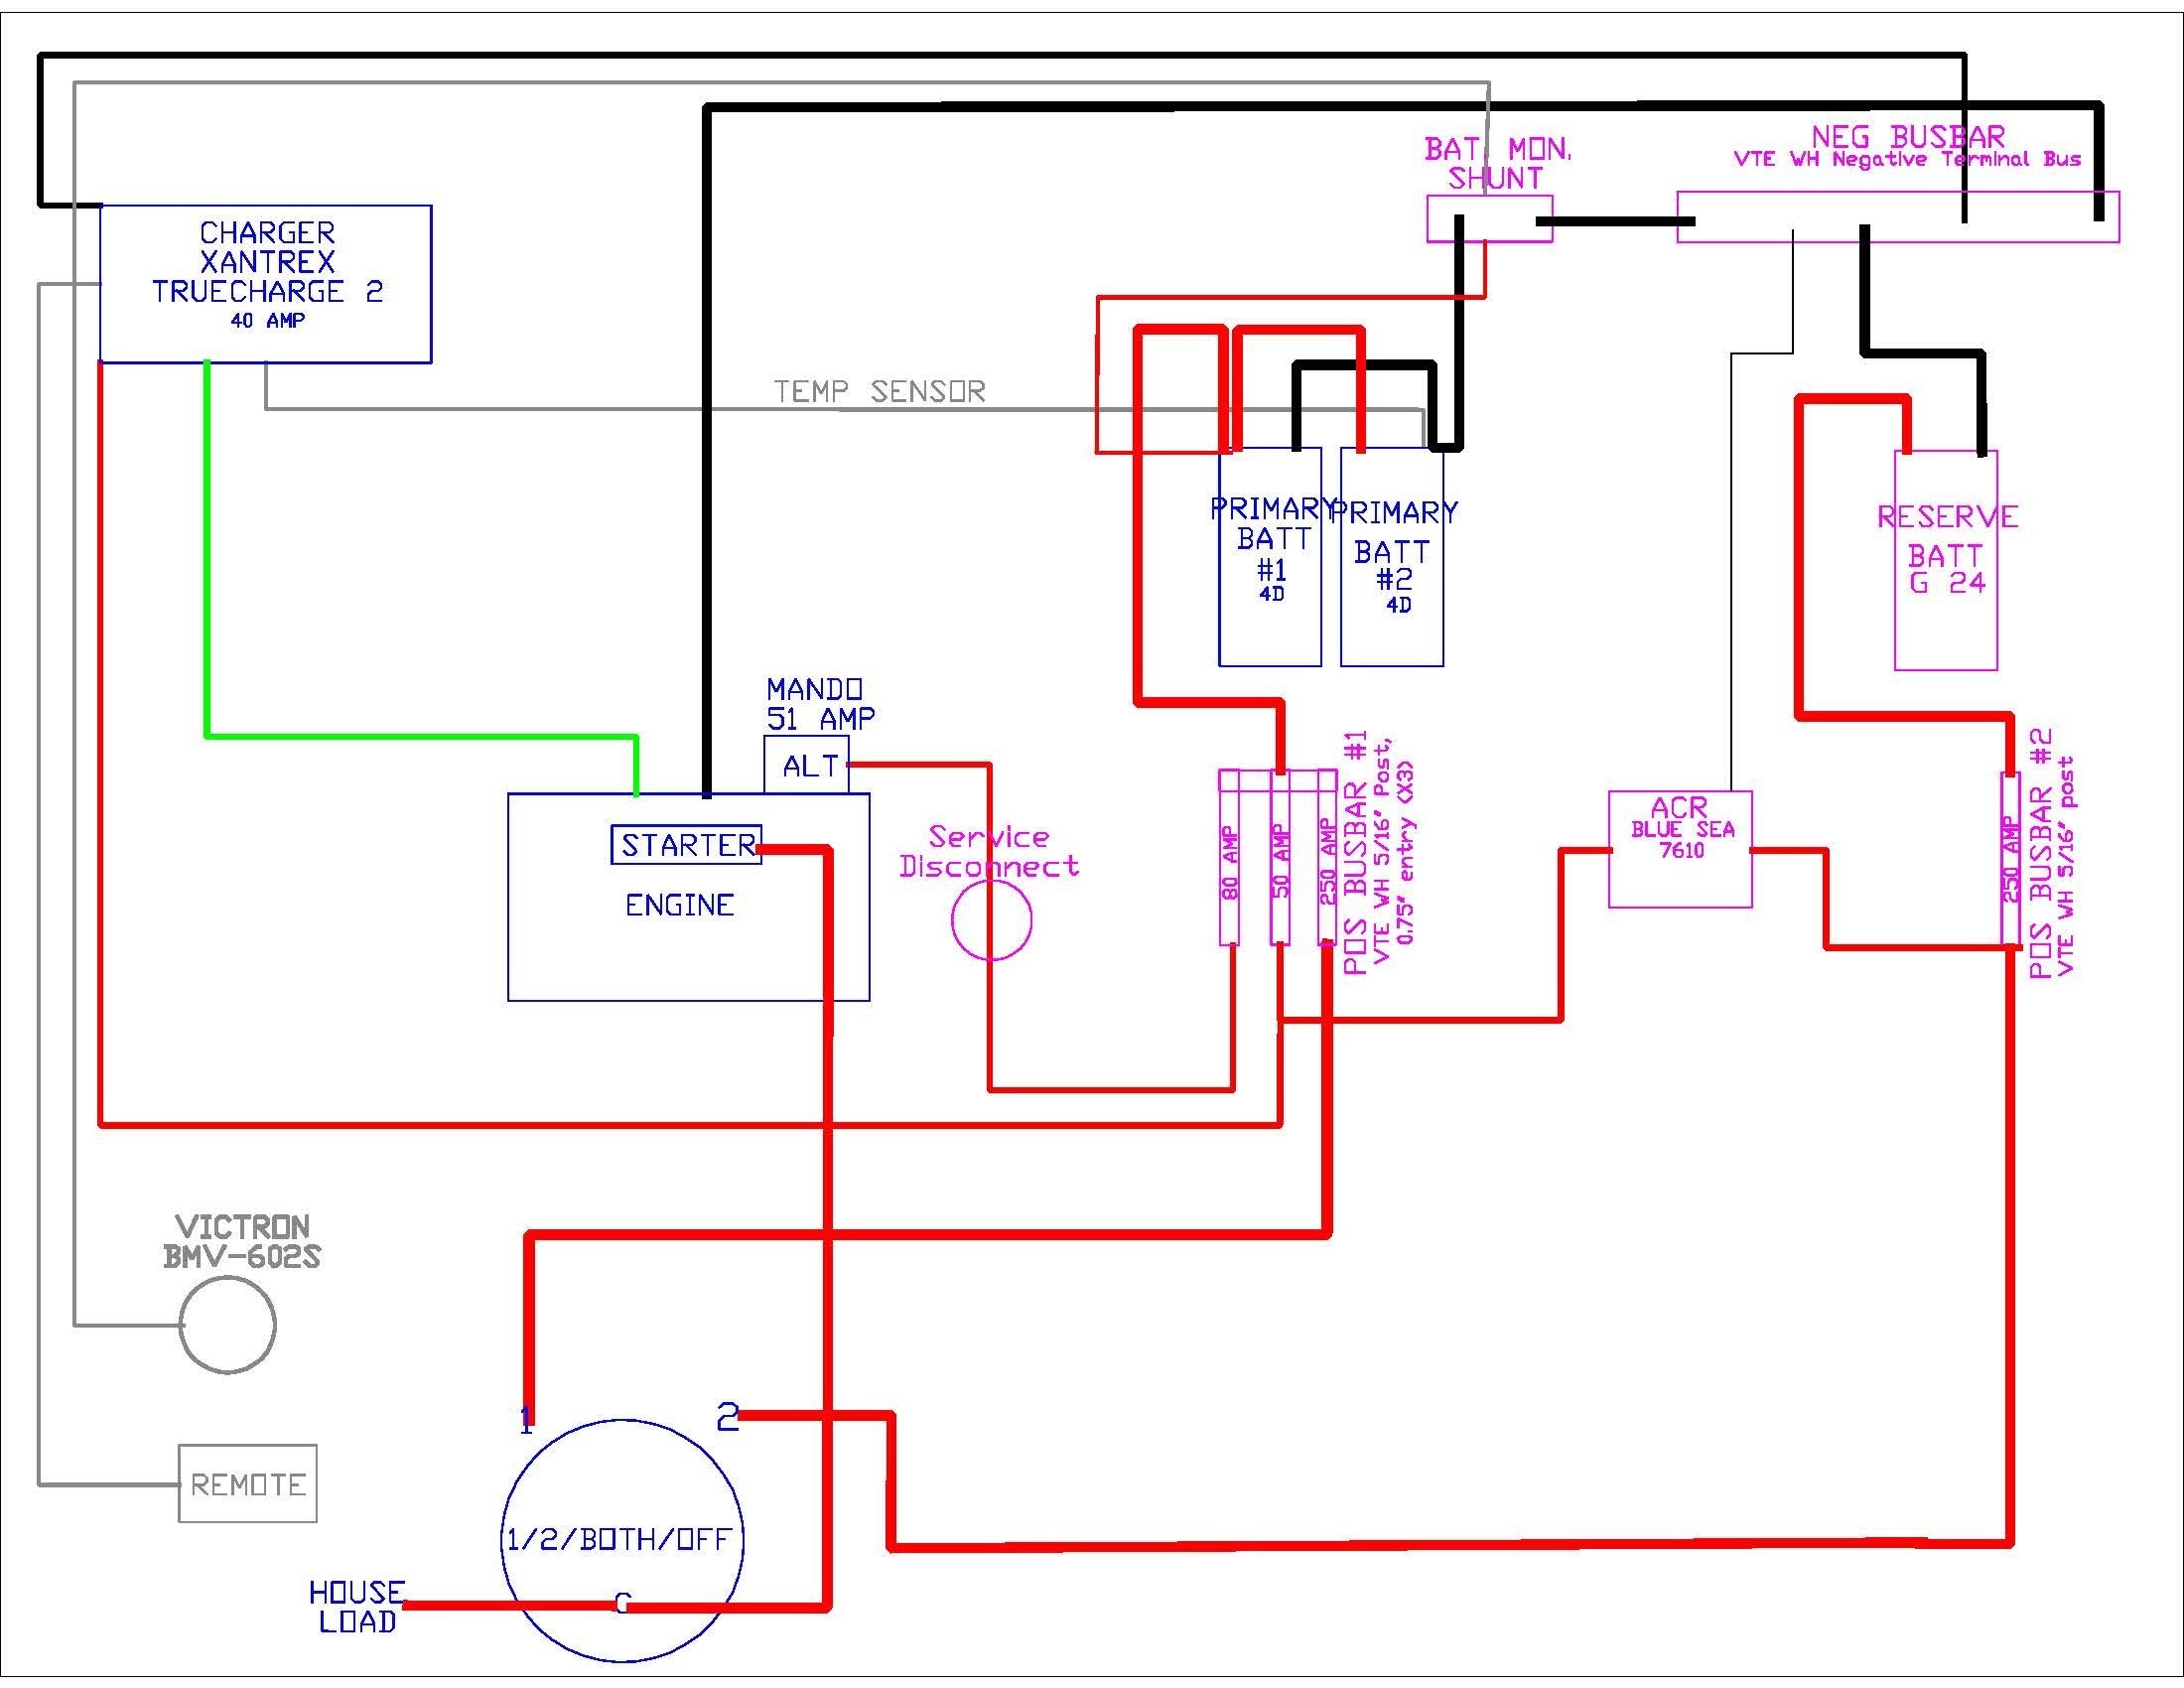 Wiring Diagram whole House Fan Inspirationa Wiring for Directv whole House Dvr Diagram Wiring solutions